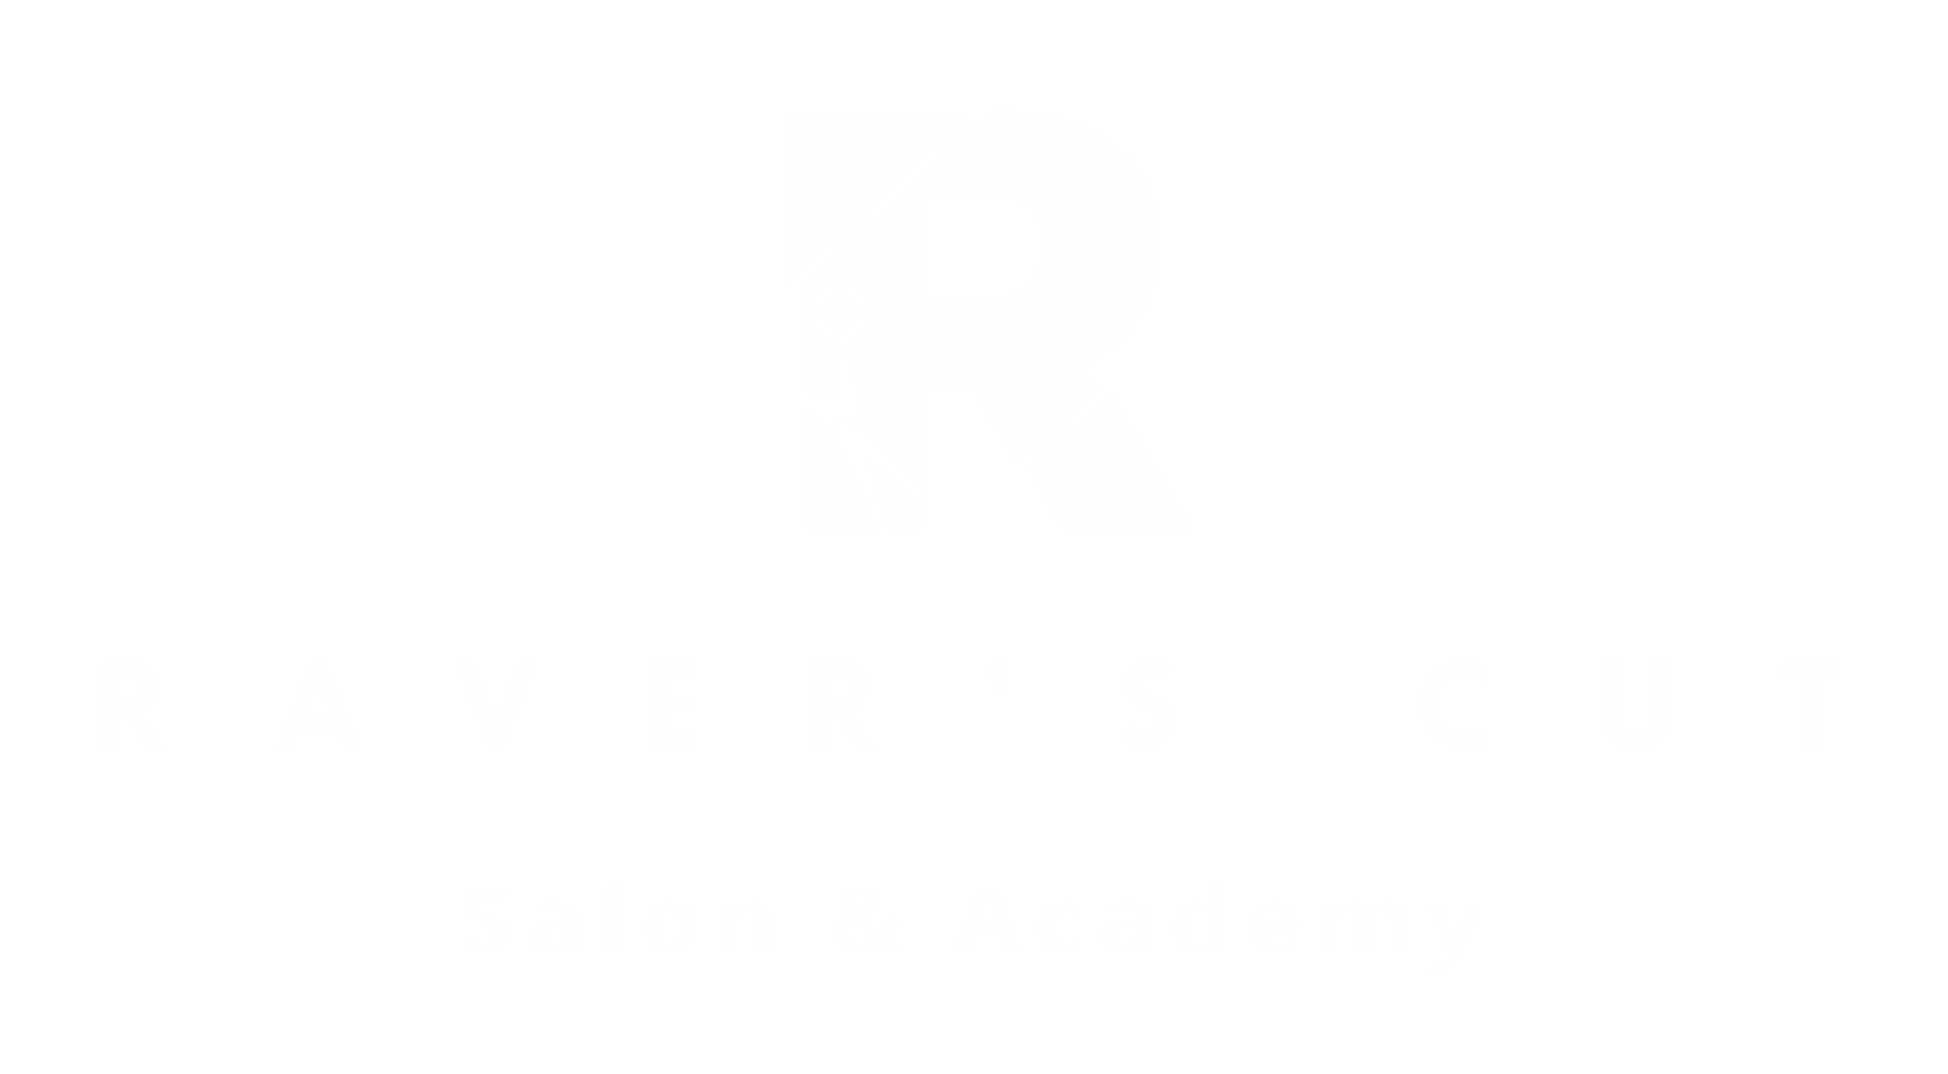 Raver's Cut